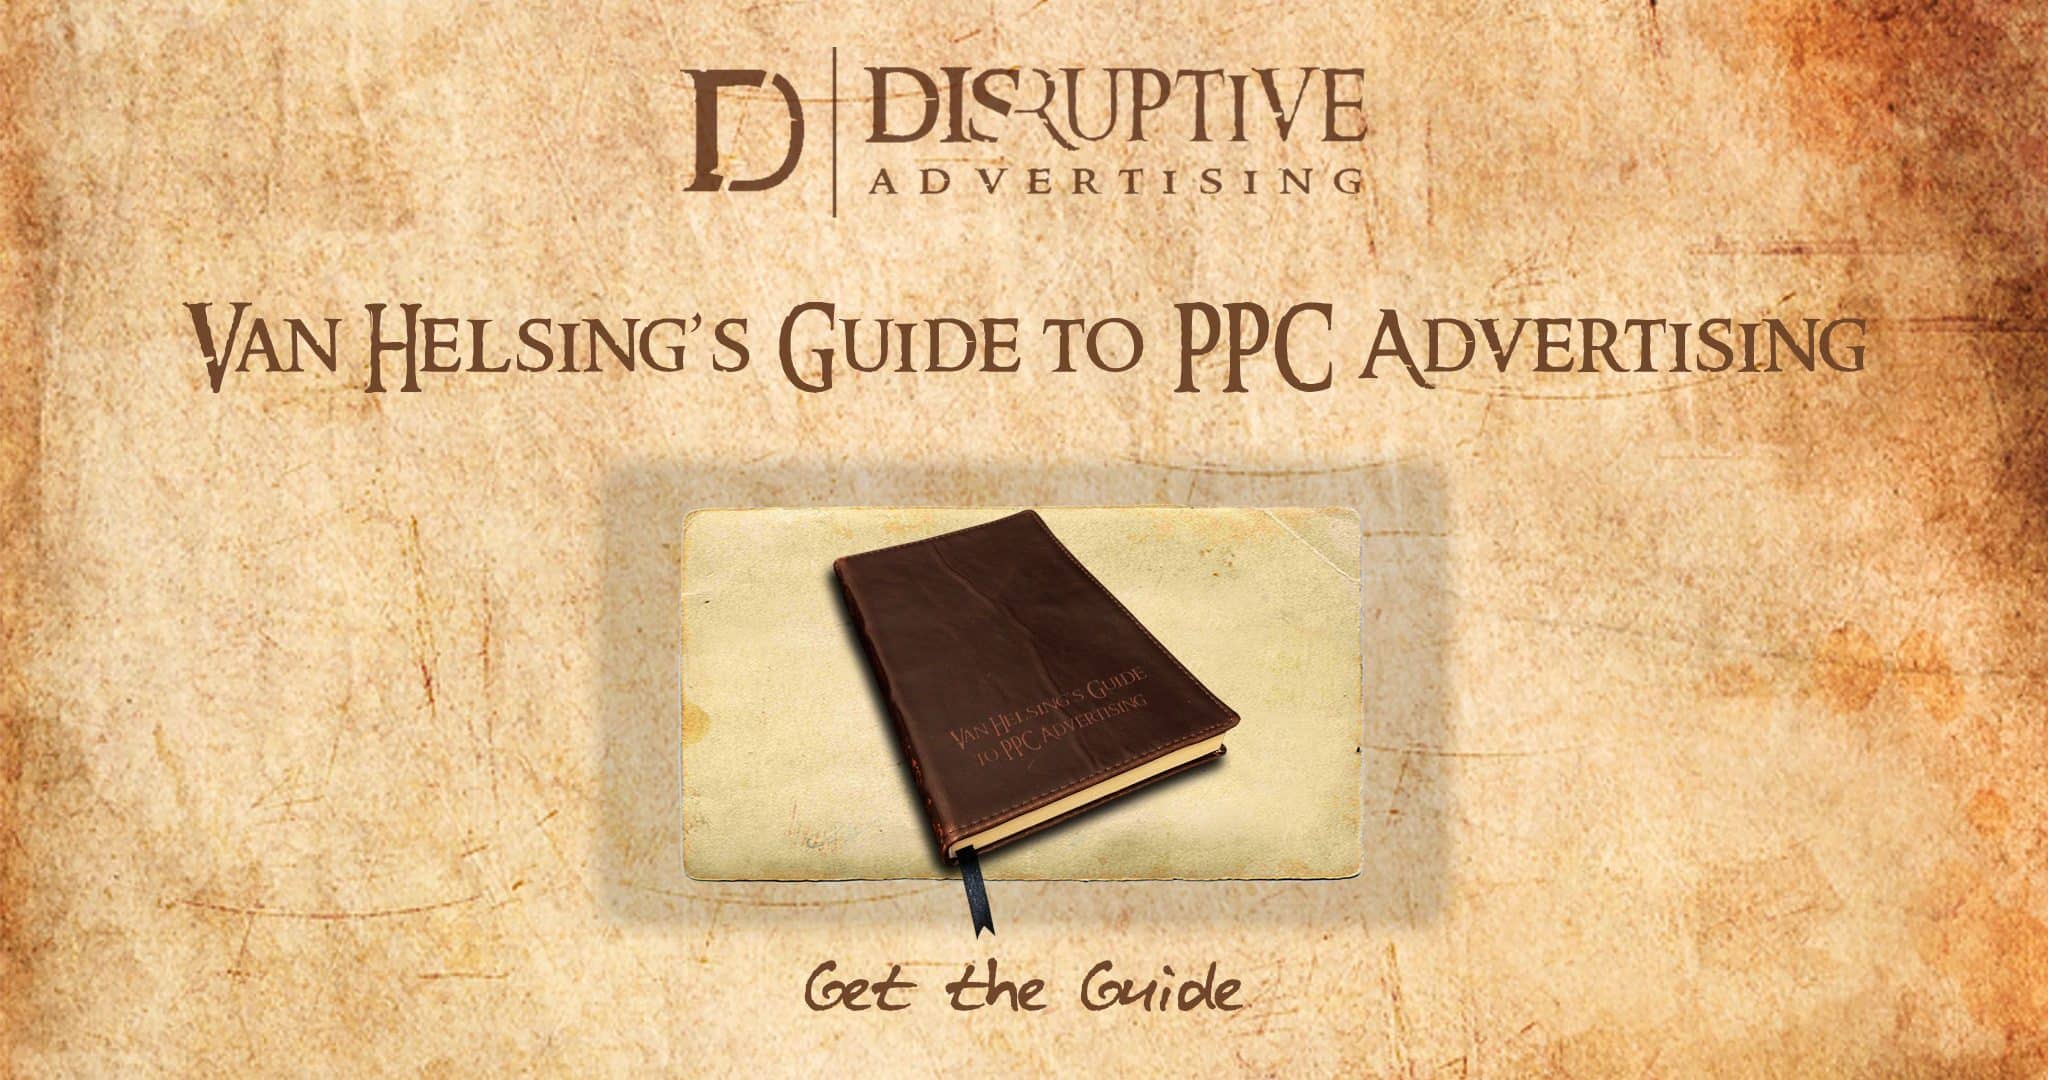 Van Helsing's Guide to PPC Advertising | Disruptive Advertising